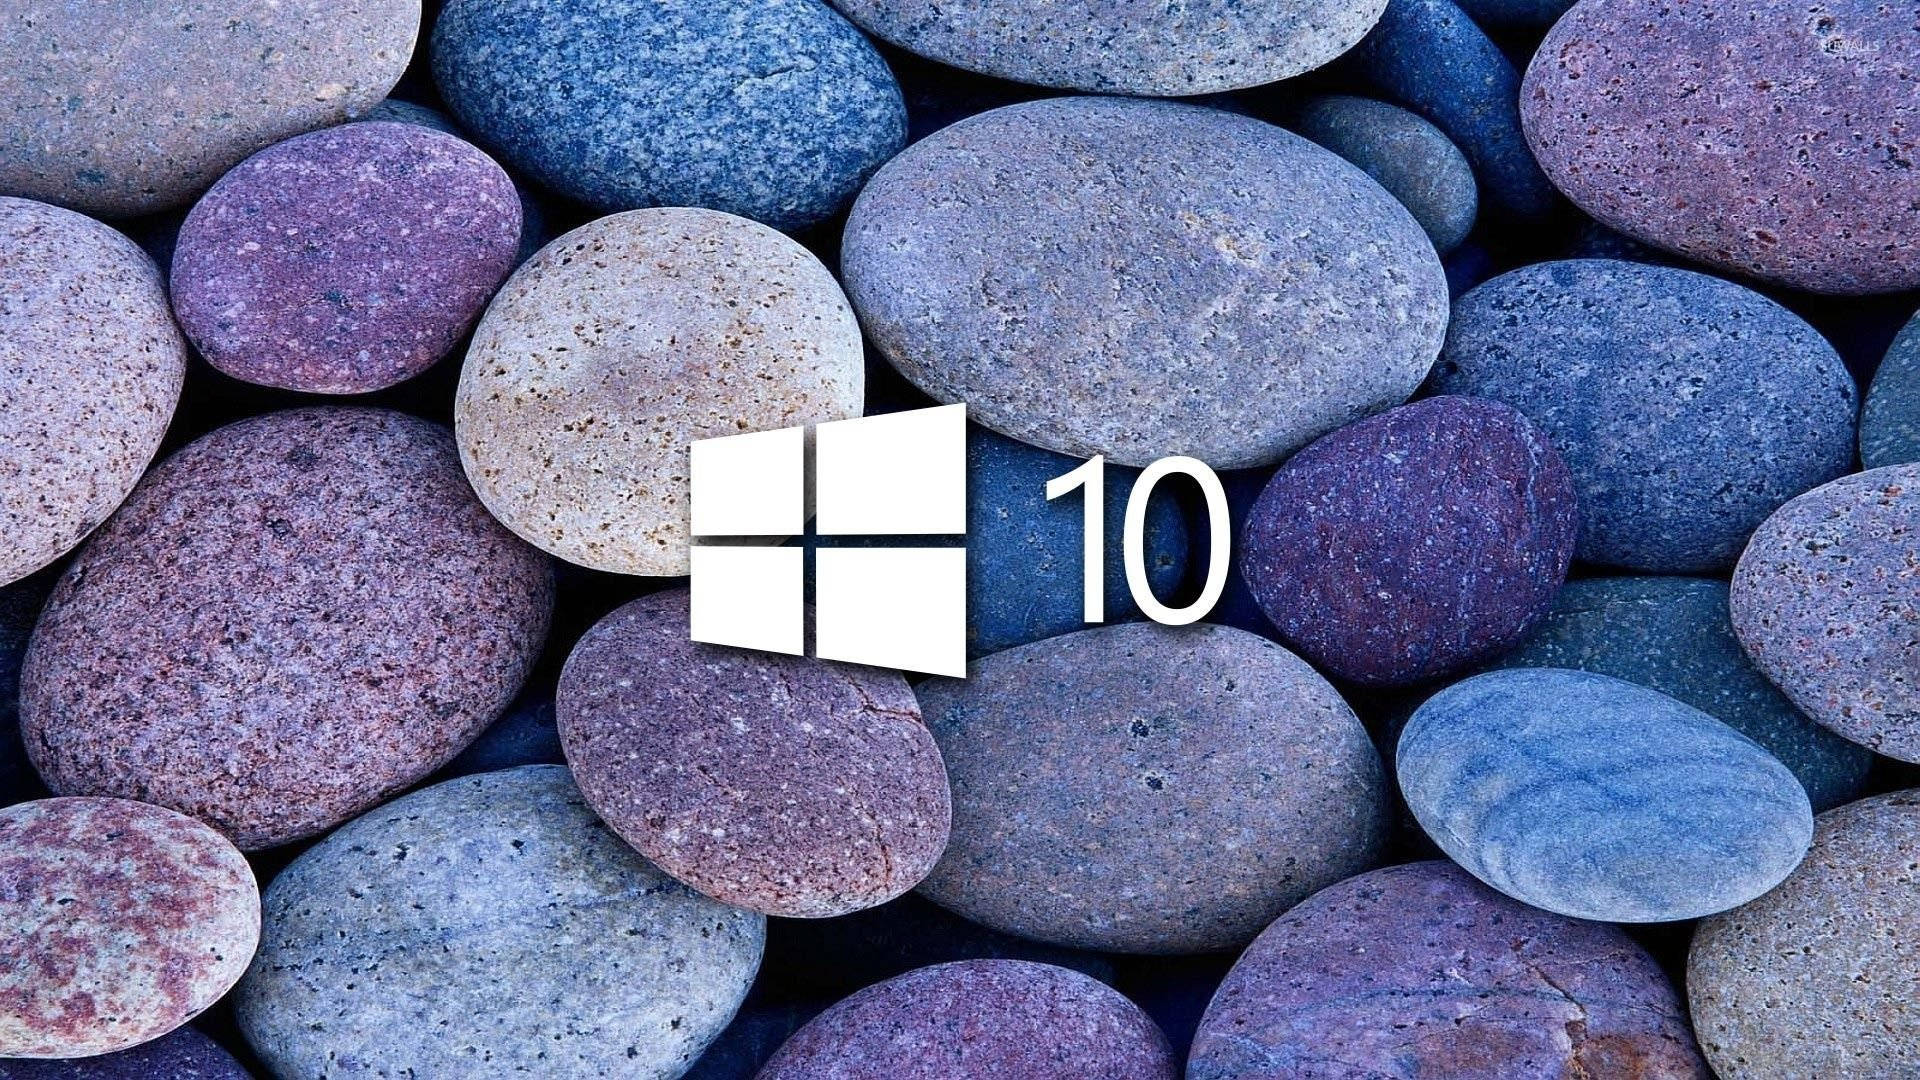 Free Windows 10 Hd Wallpaper Downloads, [100+] Windows 10 Hd Wallpapers for  FREE 